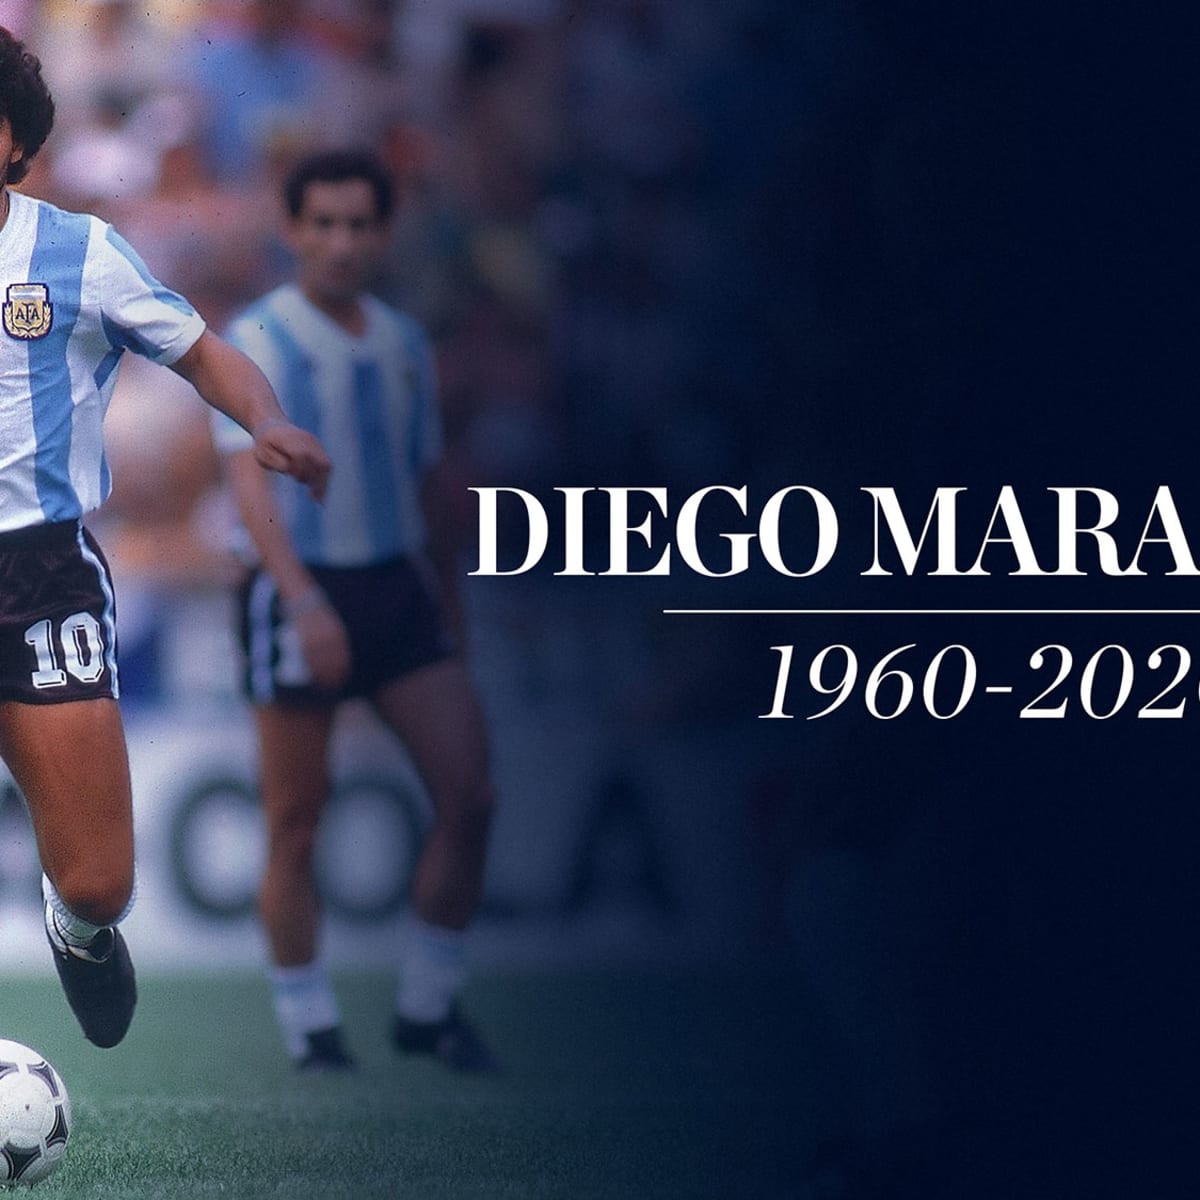 Diego Maradona obituary: Argentina legend dies at 60 - Sports Illustrated